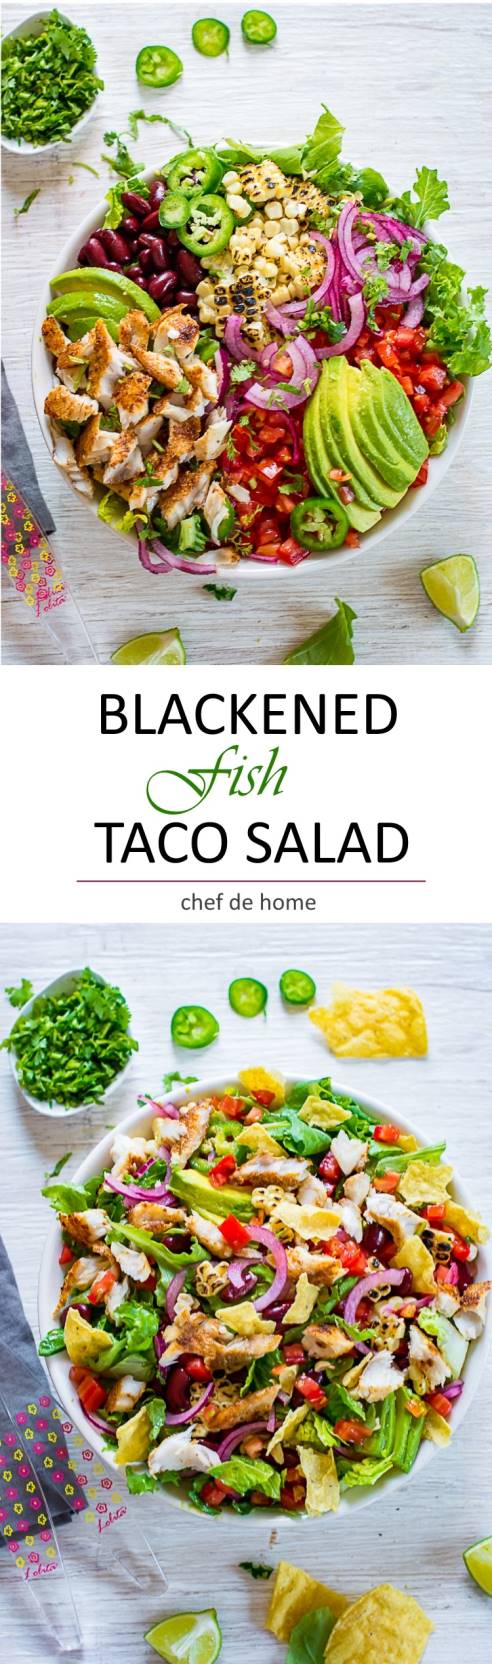 Blackened Fish Taco Salad Recipe | ChefDeHome.com